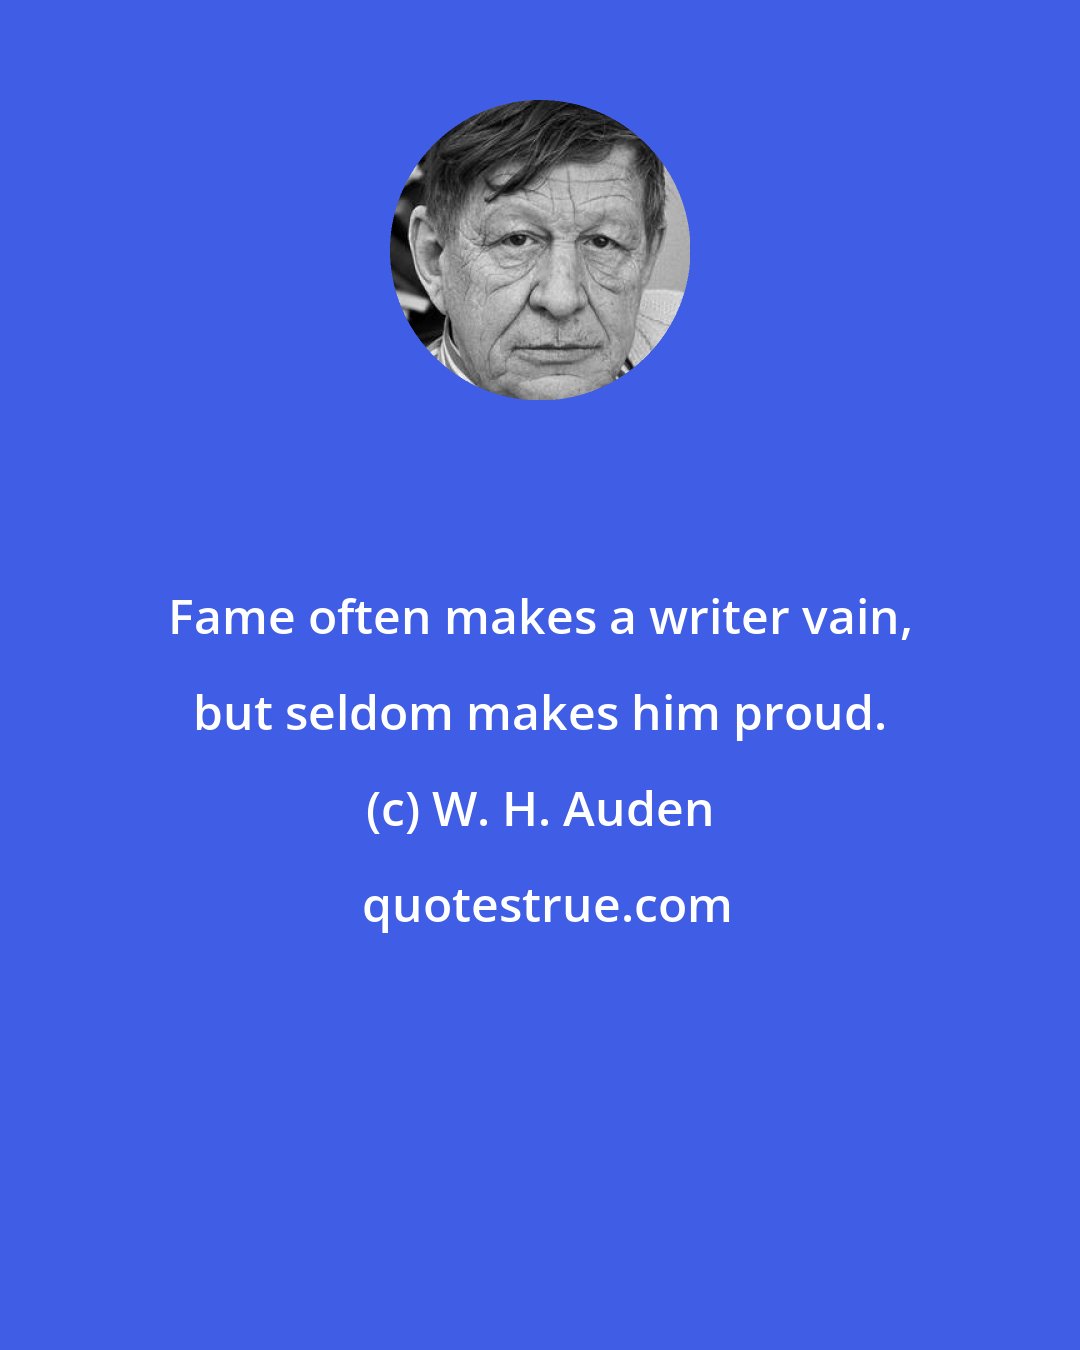 W. H. Auden: Fame often makes a writer vain, but seldom makes him proud.